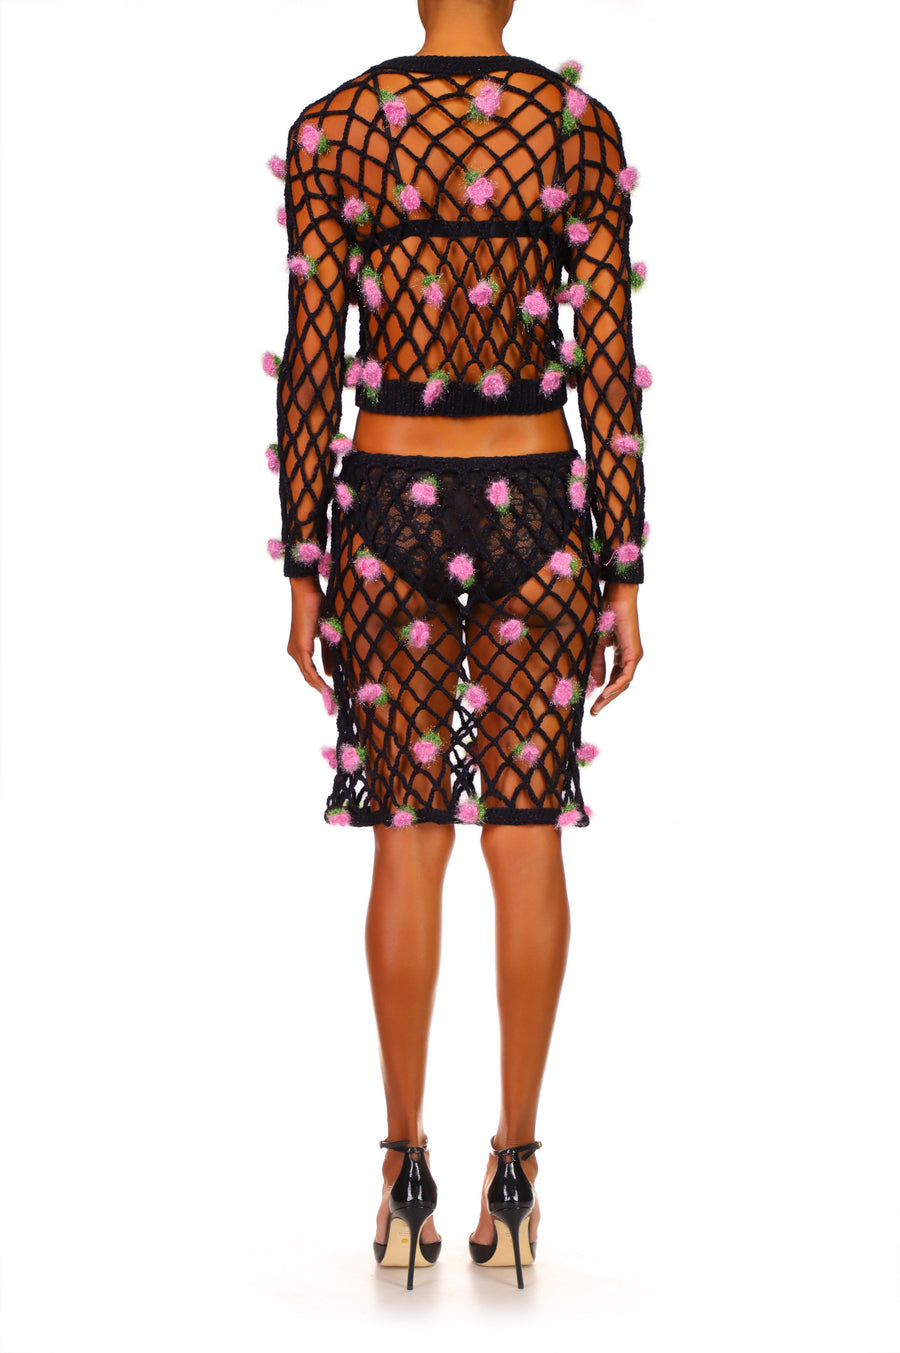 Black Hand Crochet Mini Skirt With Pink Flowers